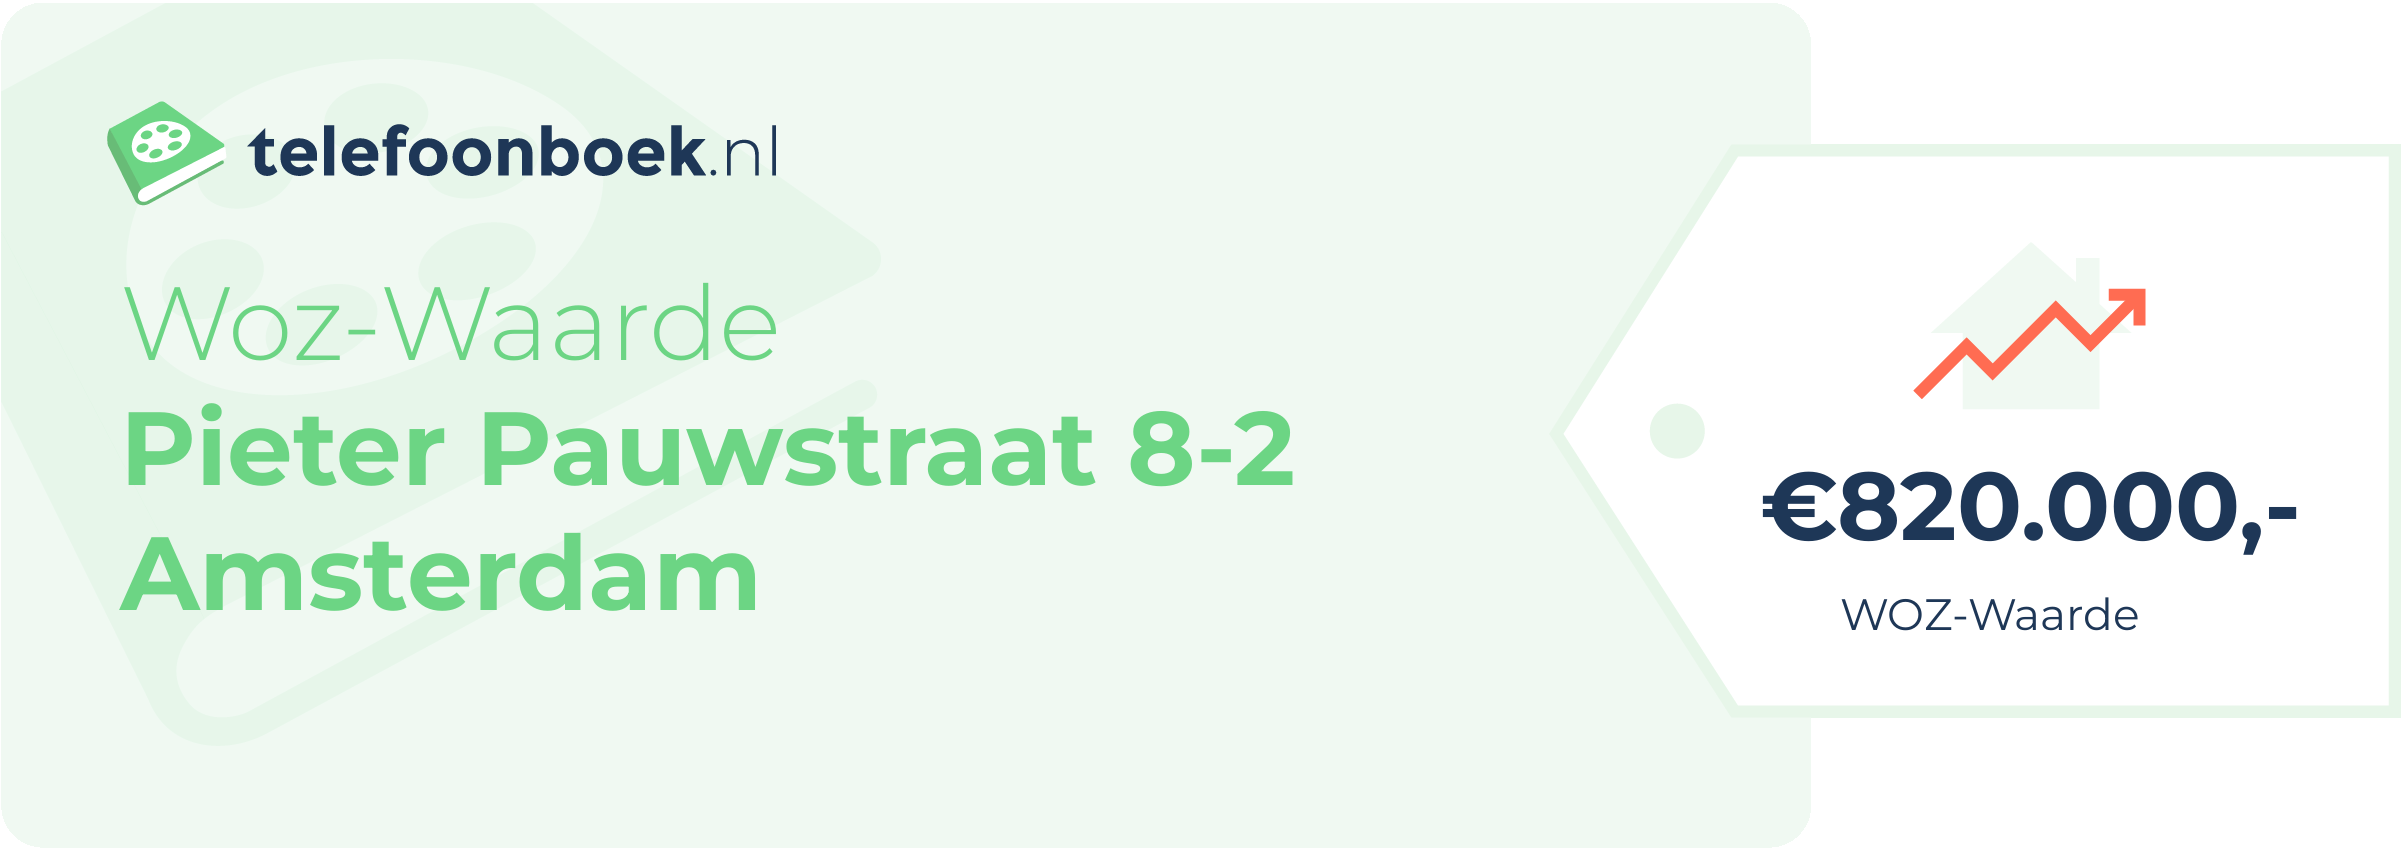 WOZ-waarde Pieter Pauwstraat 8-2 Amsterdam